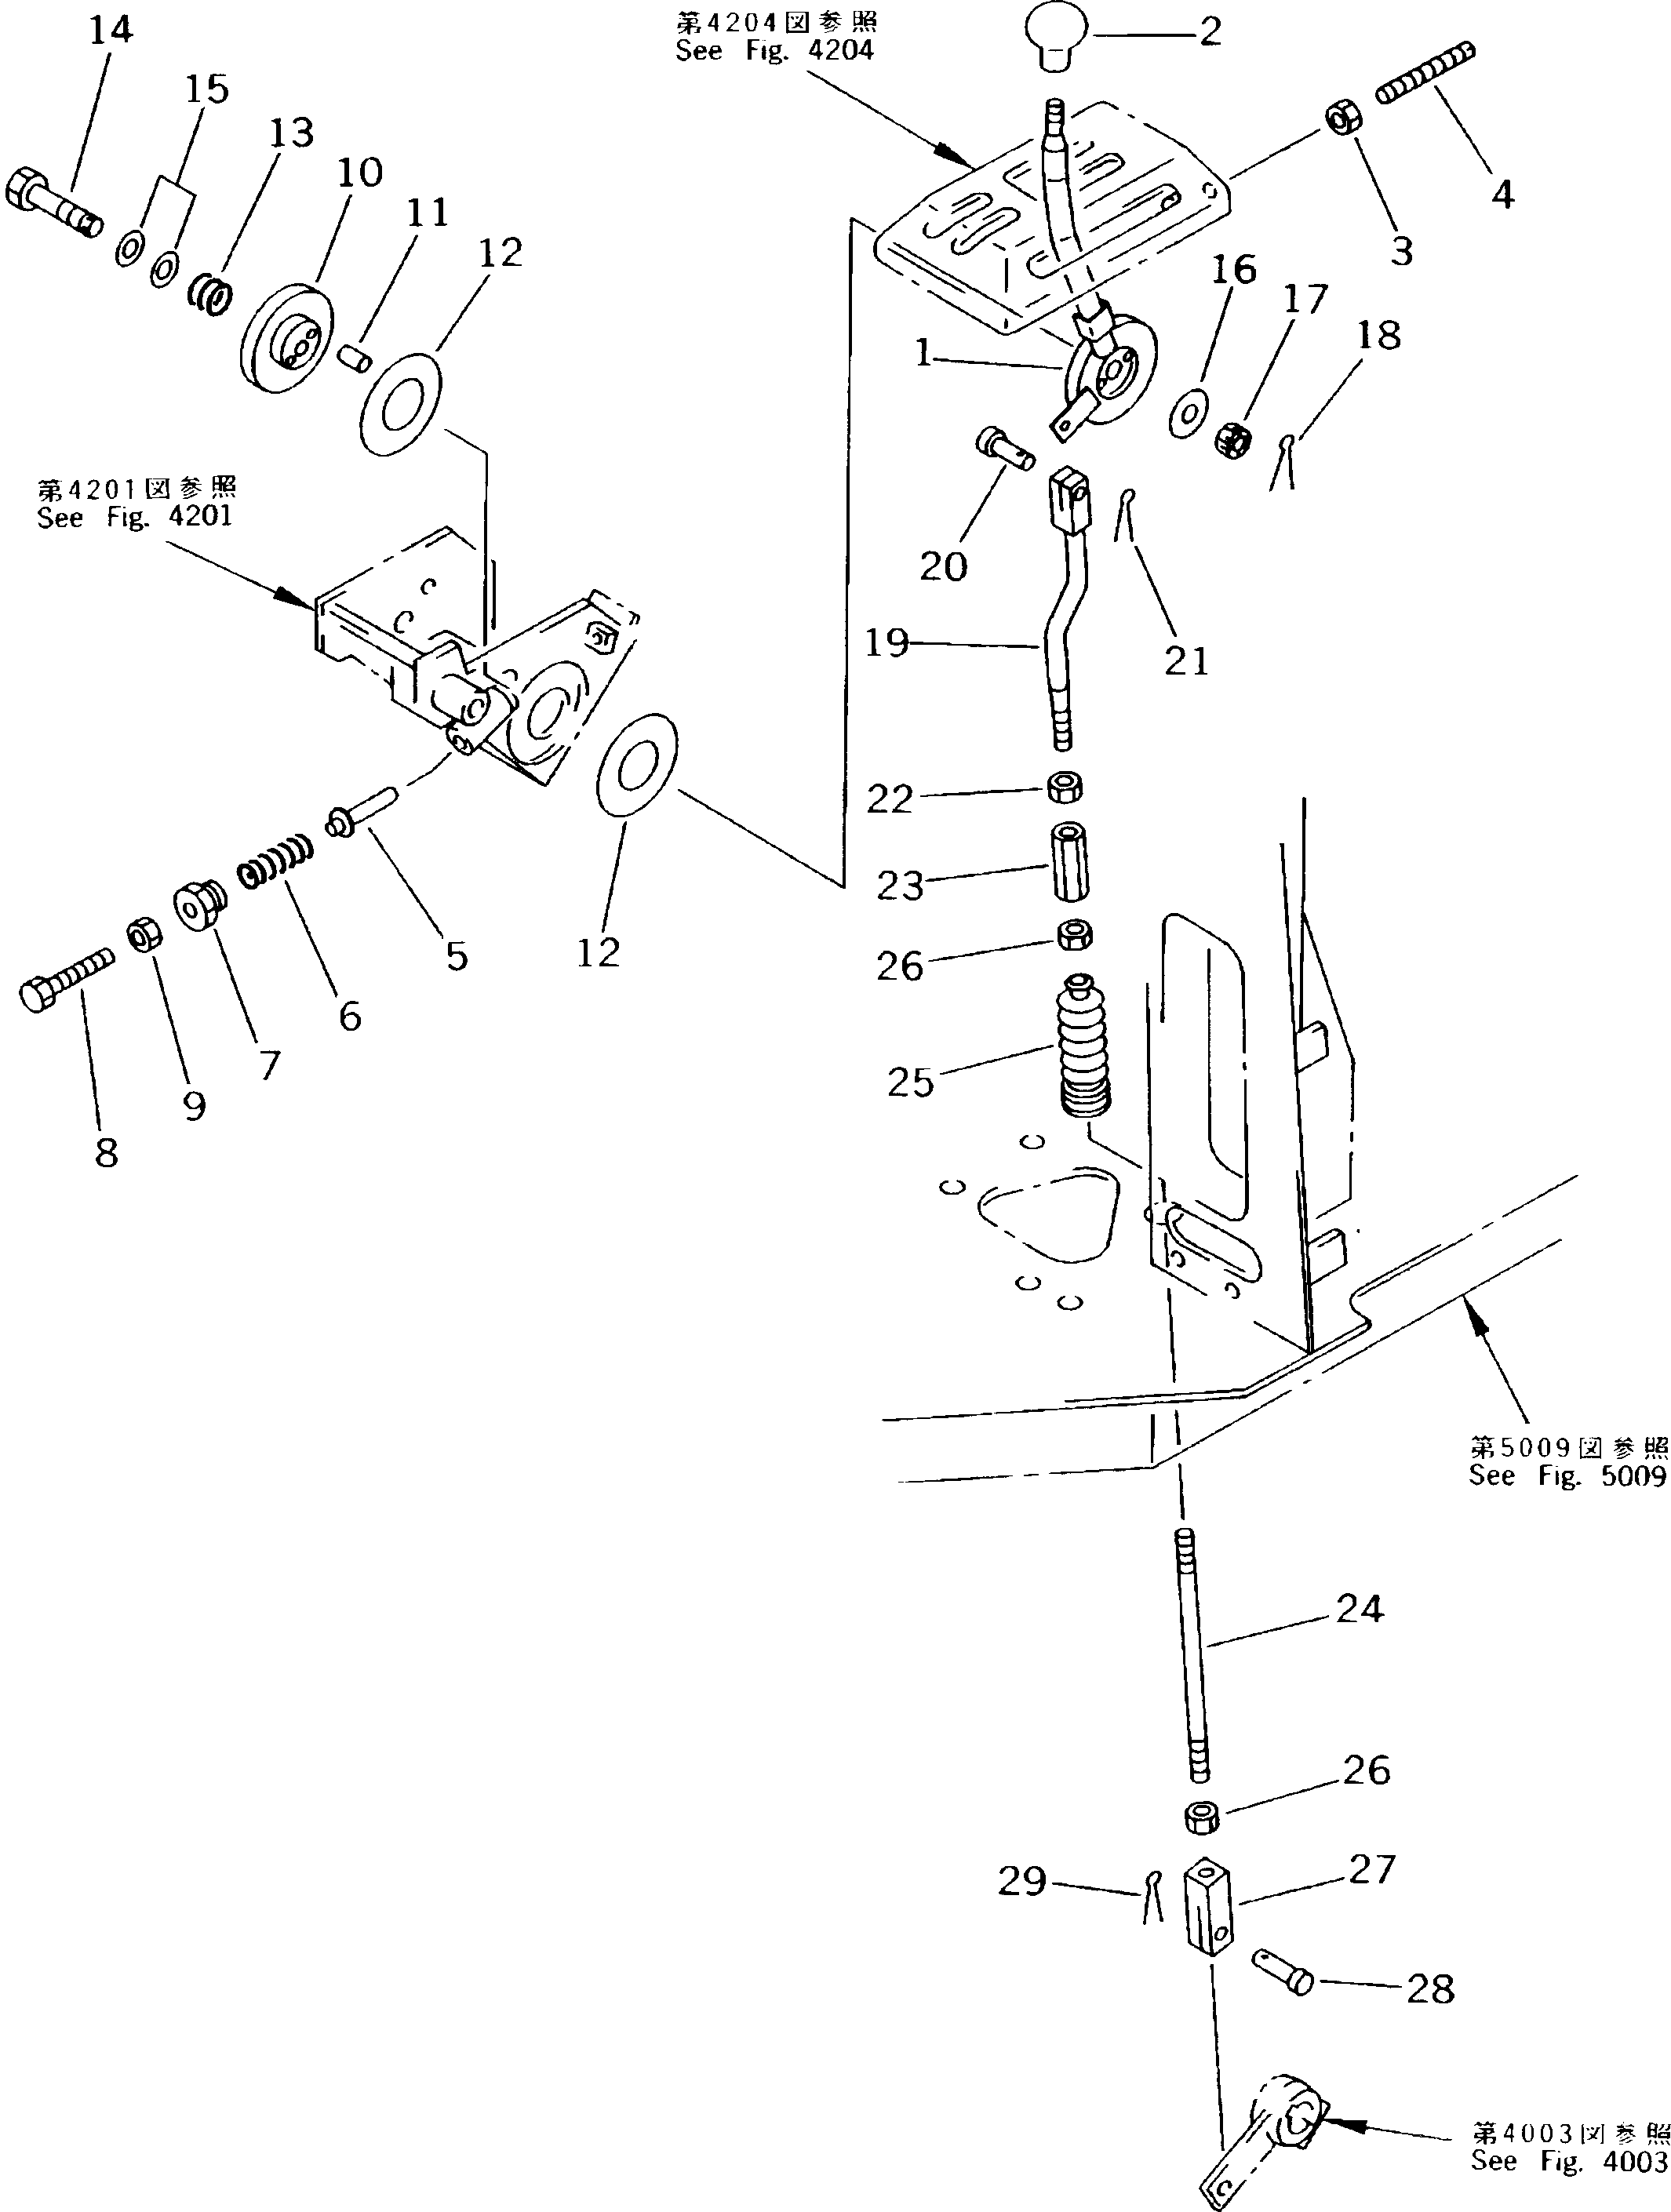 10. FUEL CONTROL LEVER [4001] - Komatsu part D135A-2 S/N 10301-UP [d135a-2c]